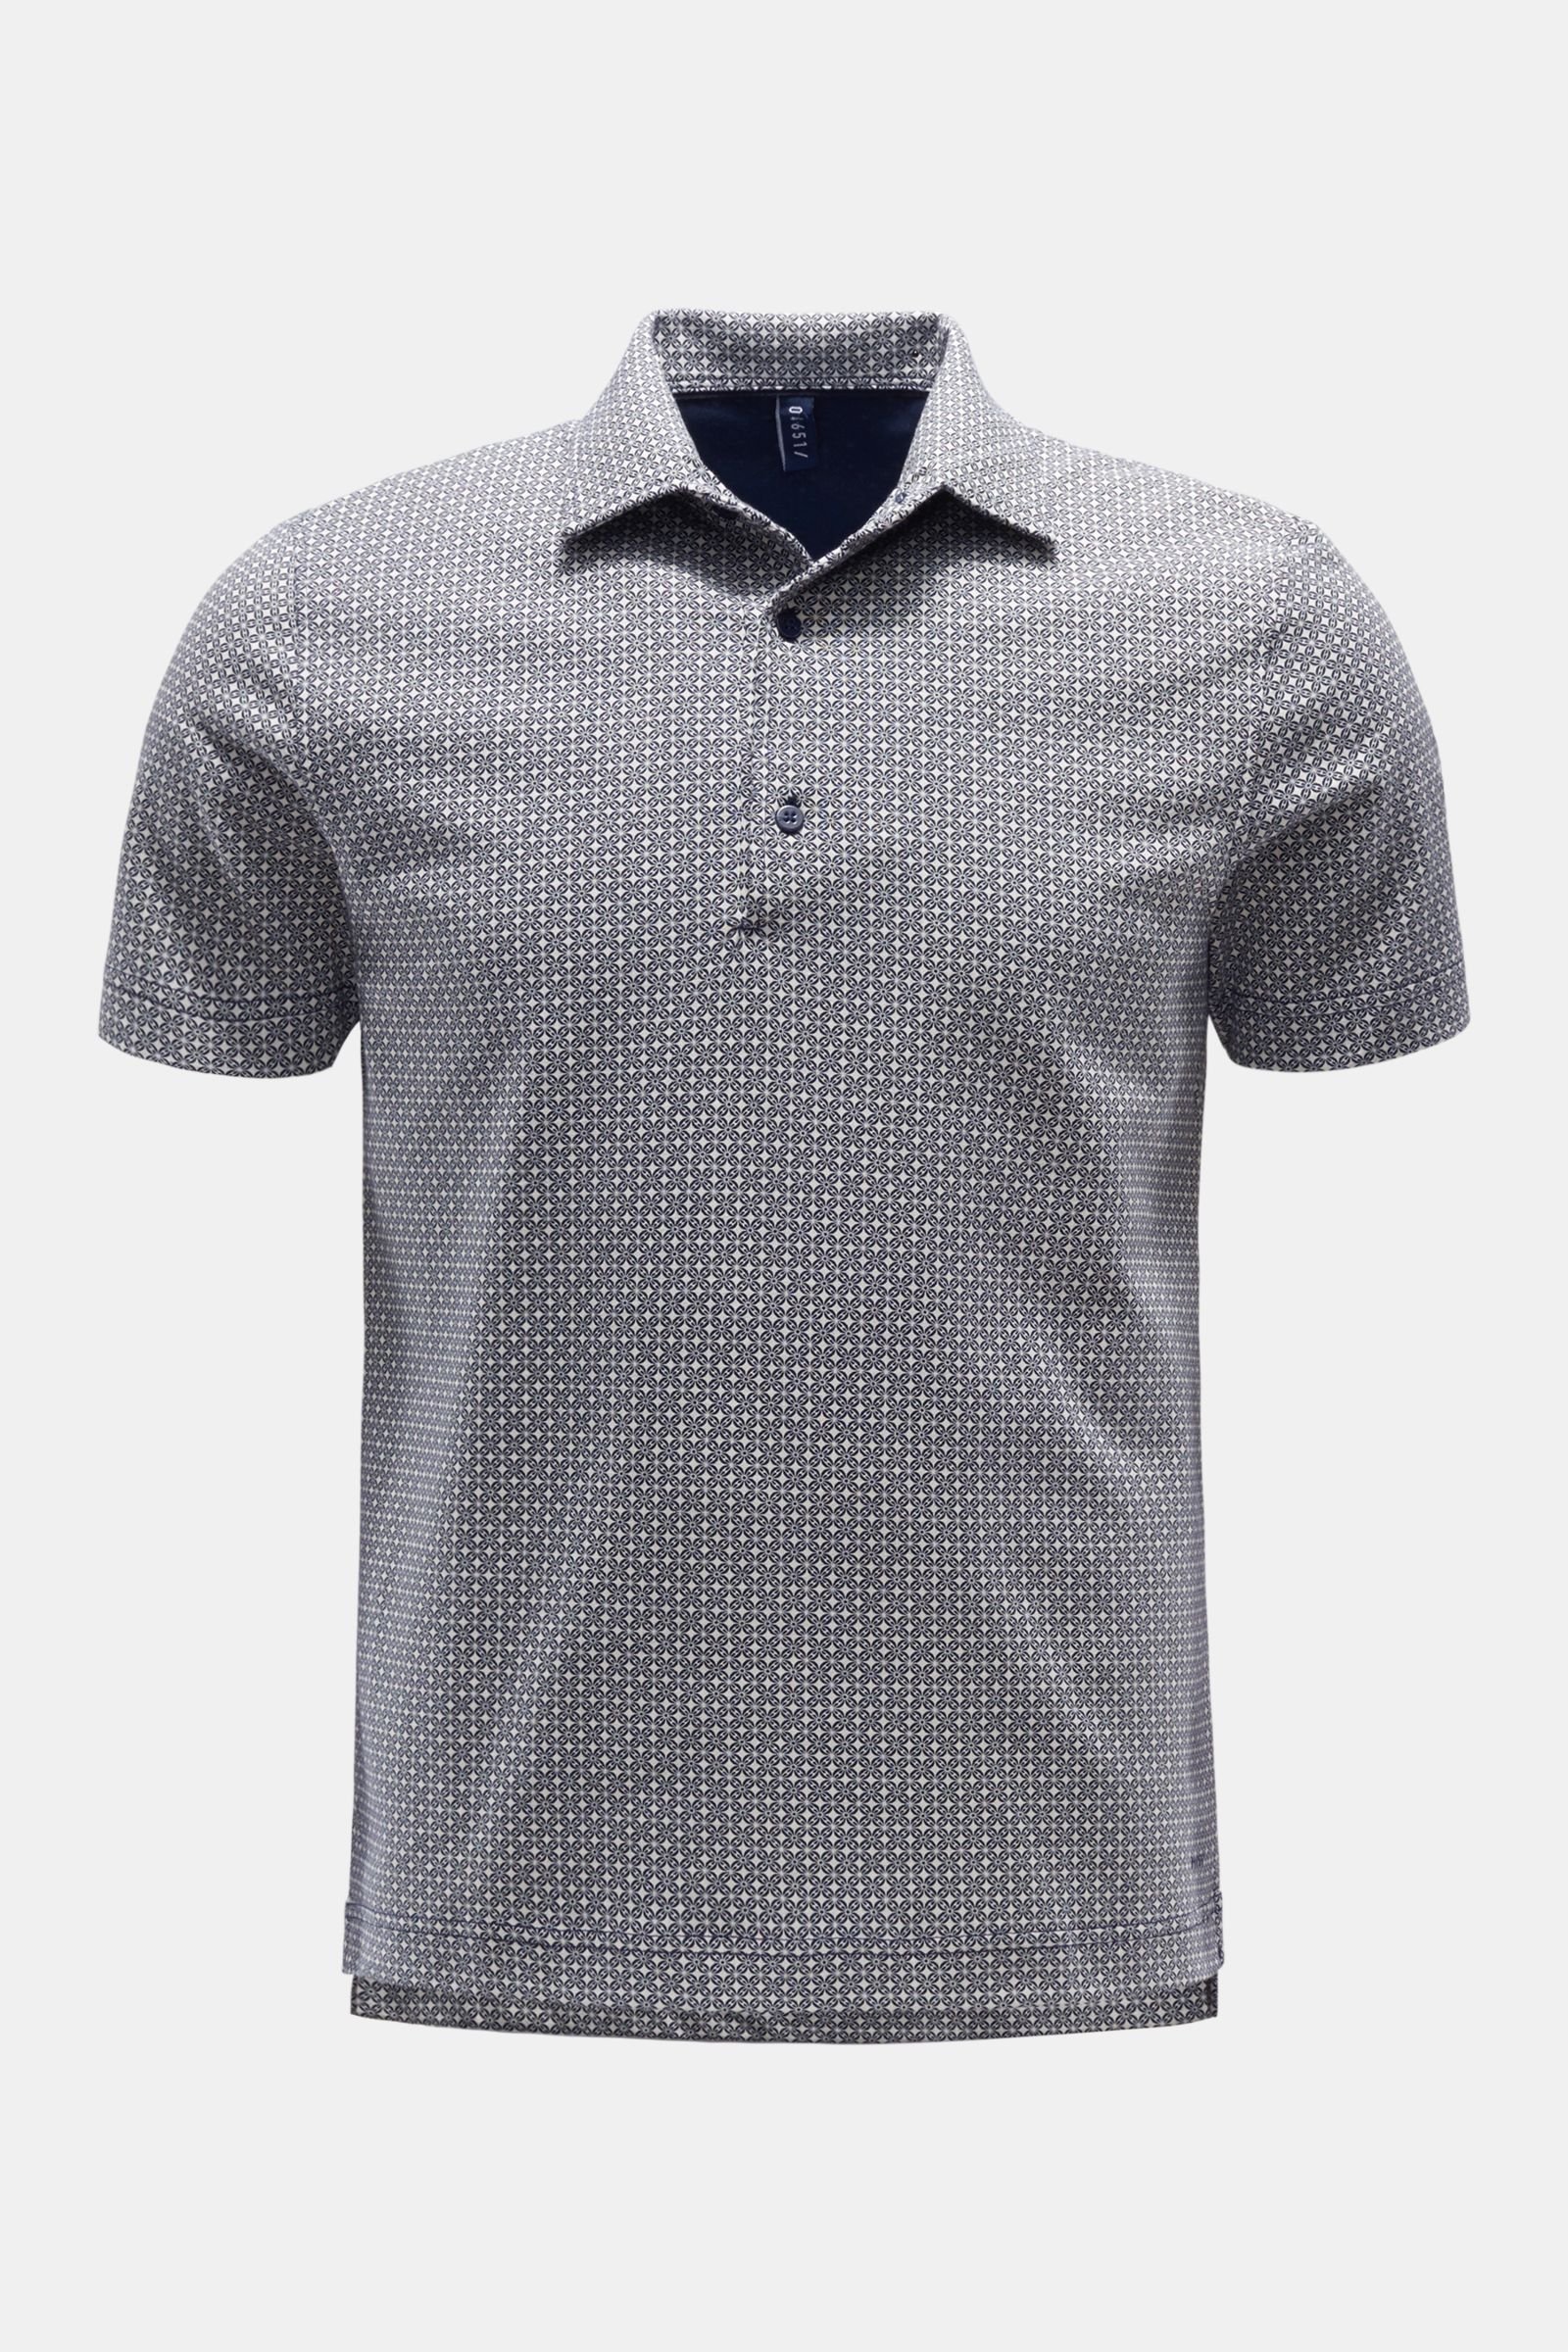 Jersey polo shirt navy patterned